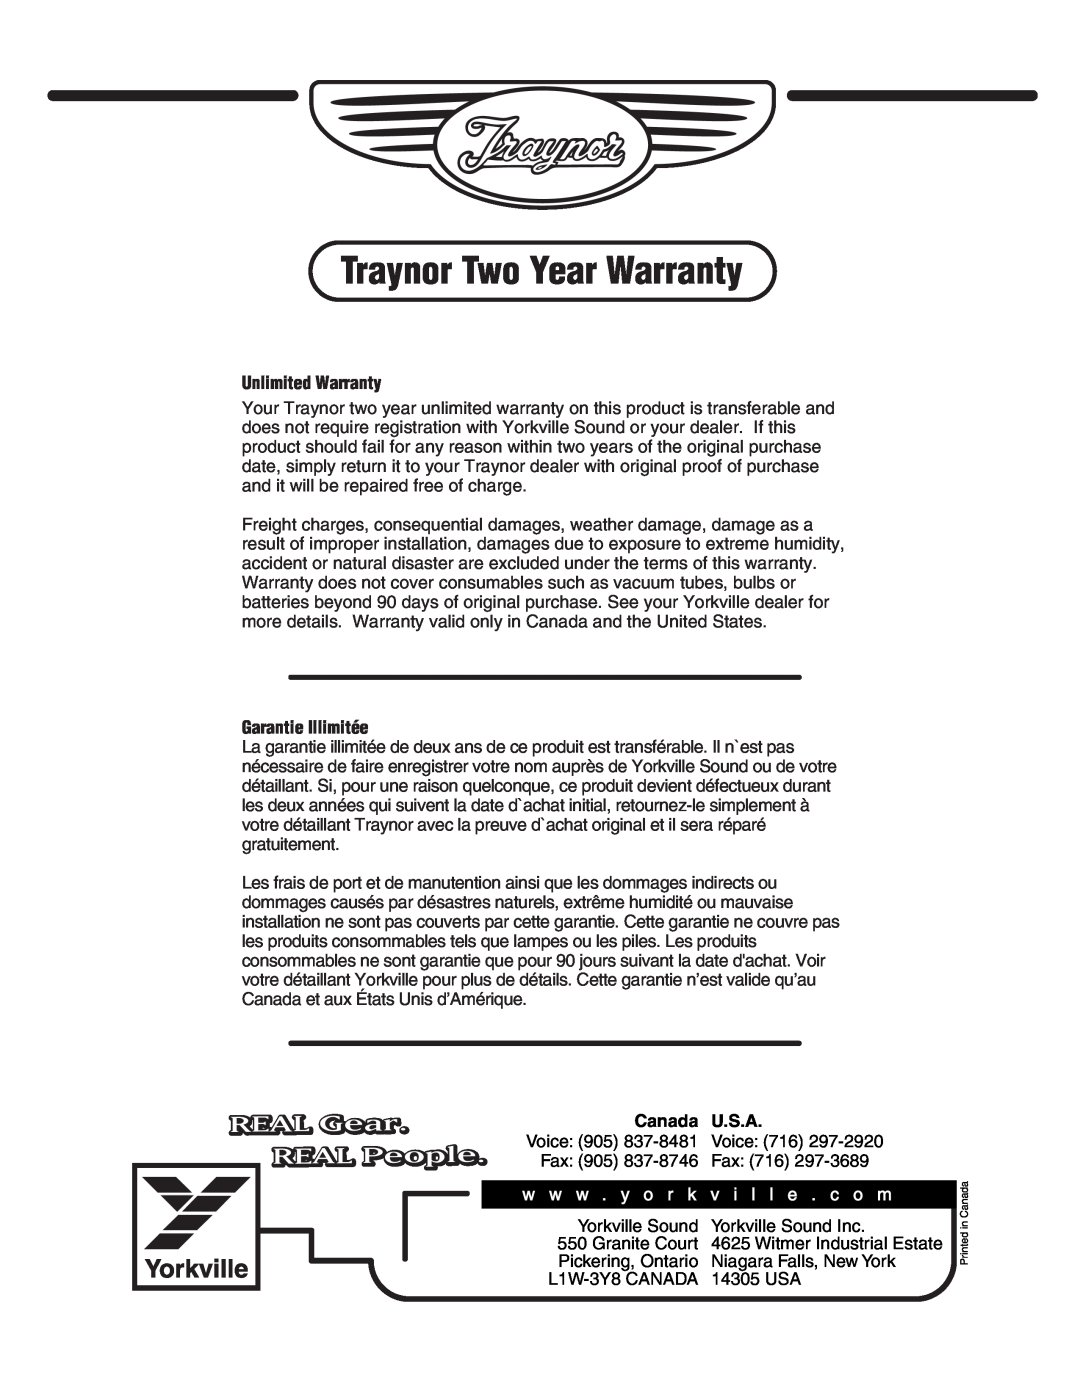 Yorkville Sound YS1003 owner manual Traynor Two Year Warranty, REAL Gear, REAL People, w w w . y o r k v i l l e . c o m 